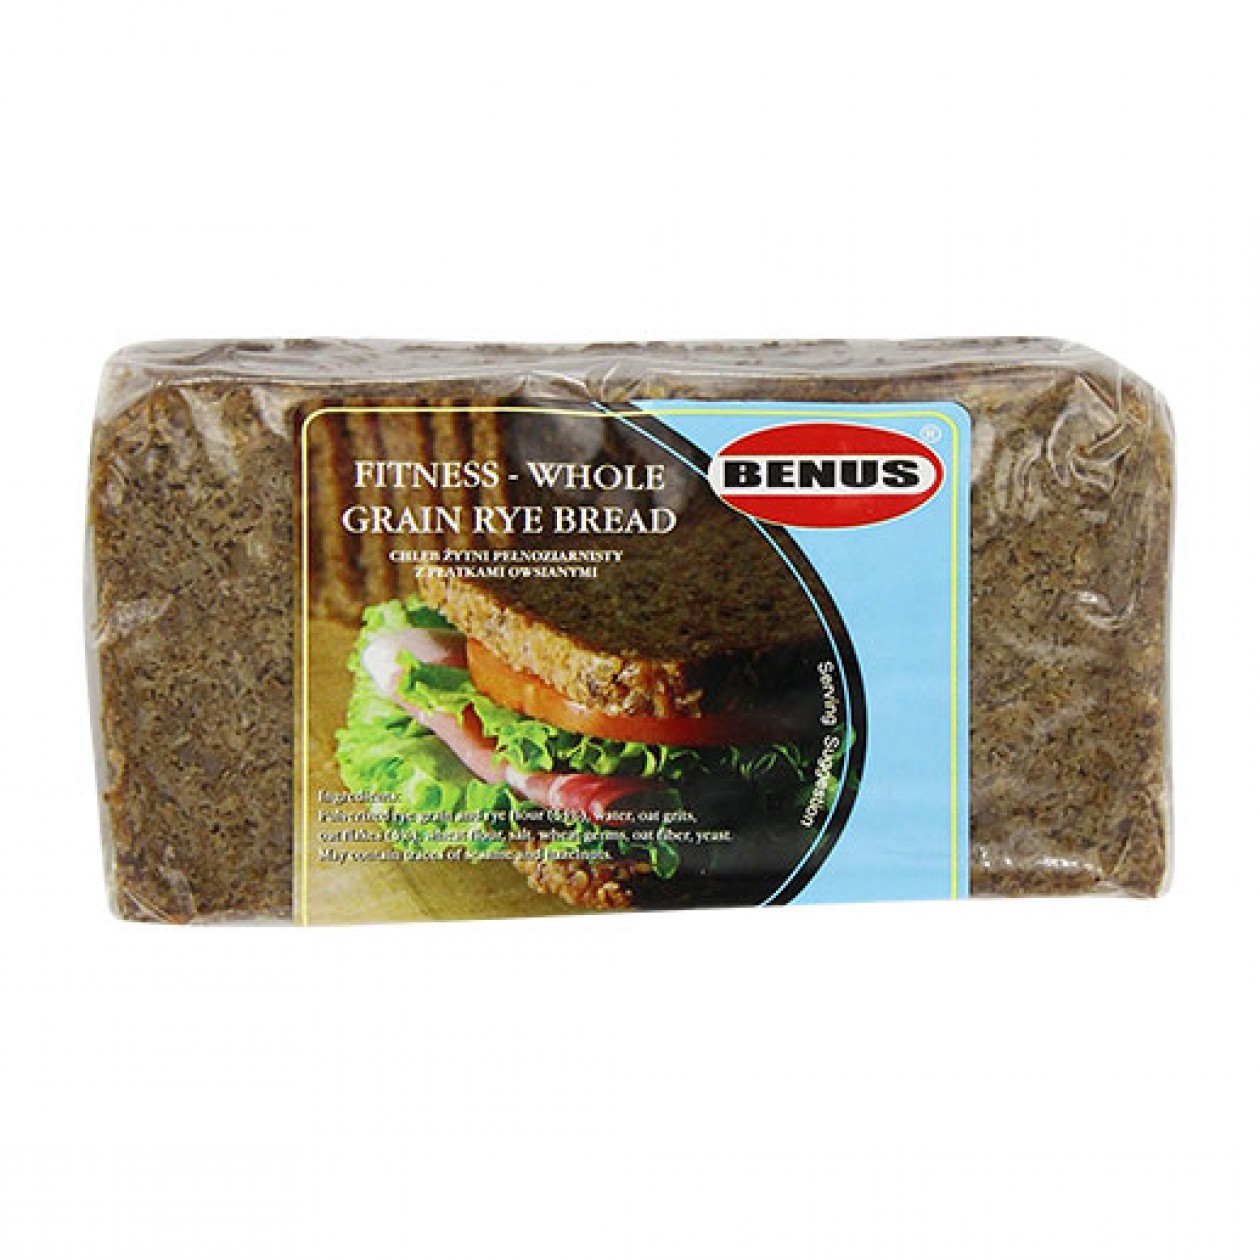 Benus Fitness Whole Grain Rye Bread 12x500g